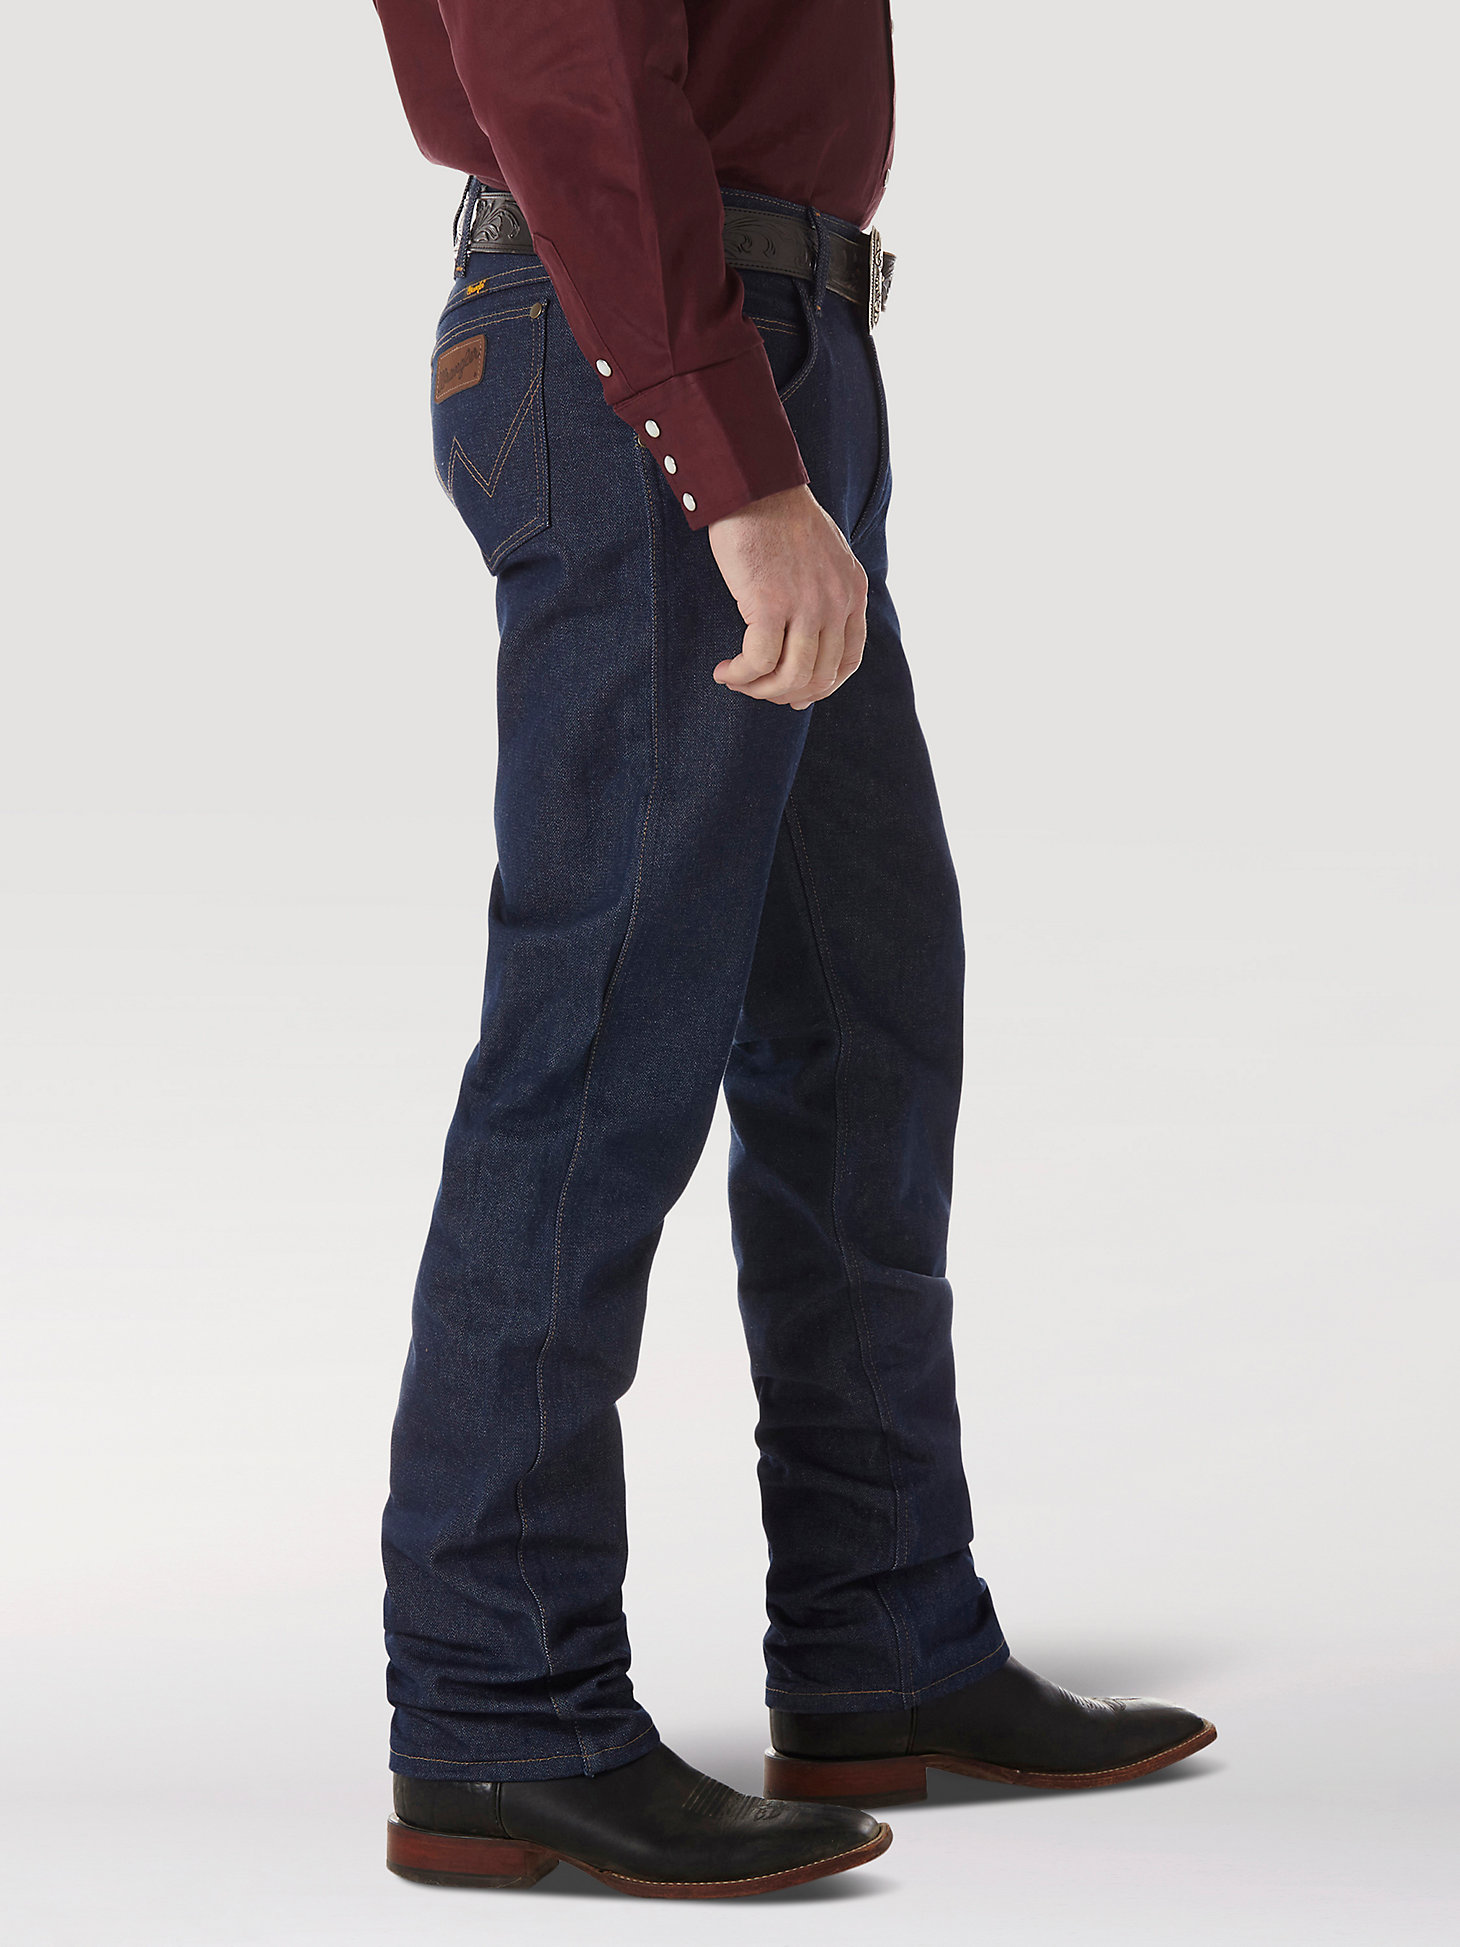 Rigid Premium Performance Cowboy Cut® Regular Fit Jean in Rigid alternative view 1